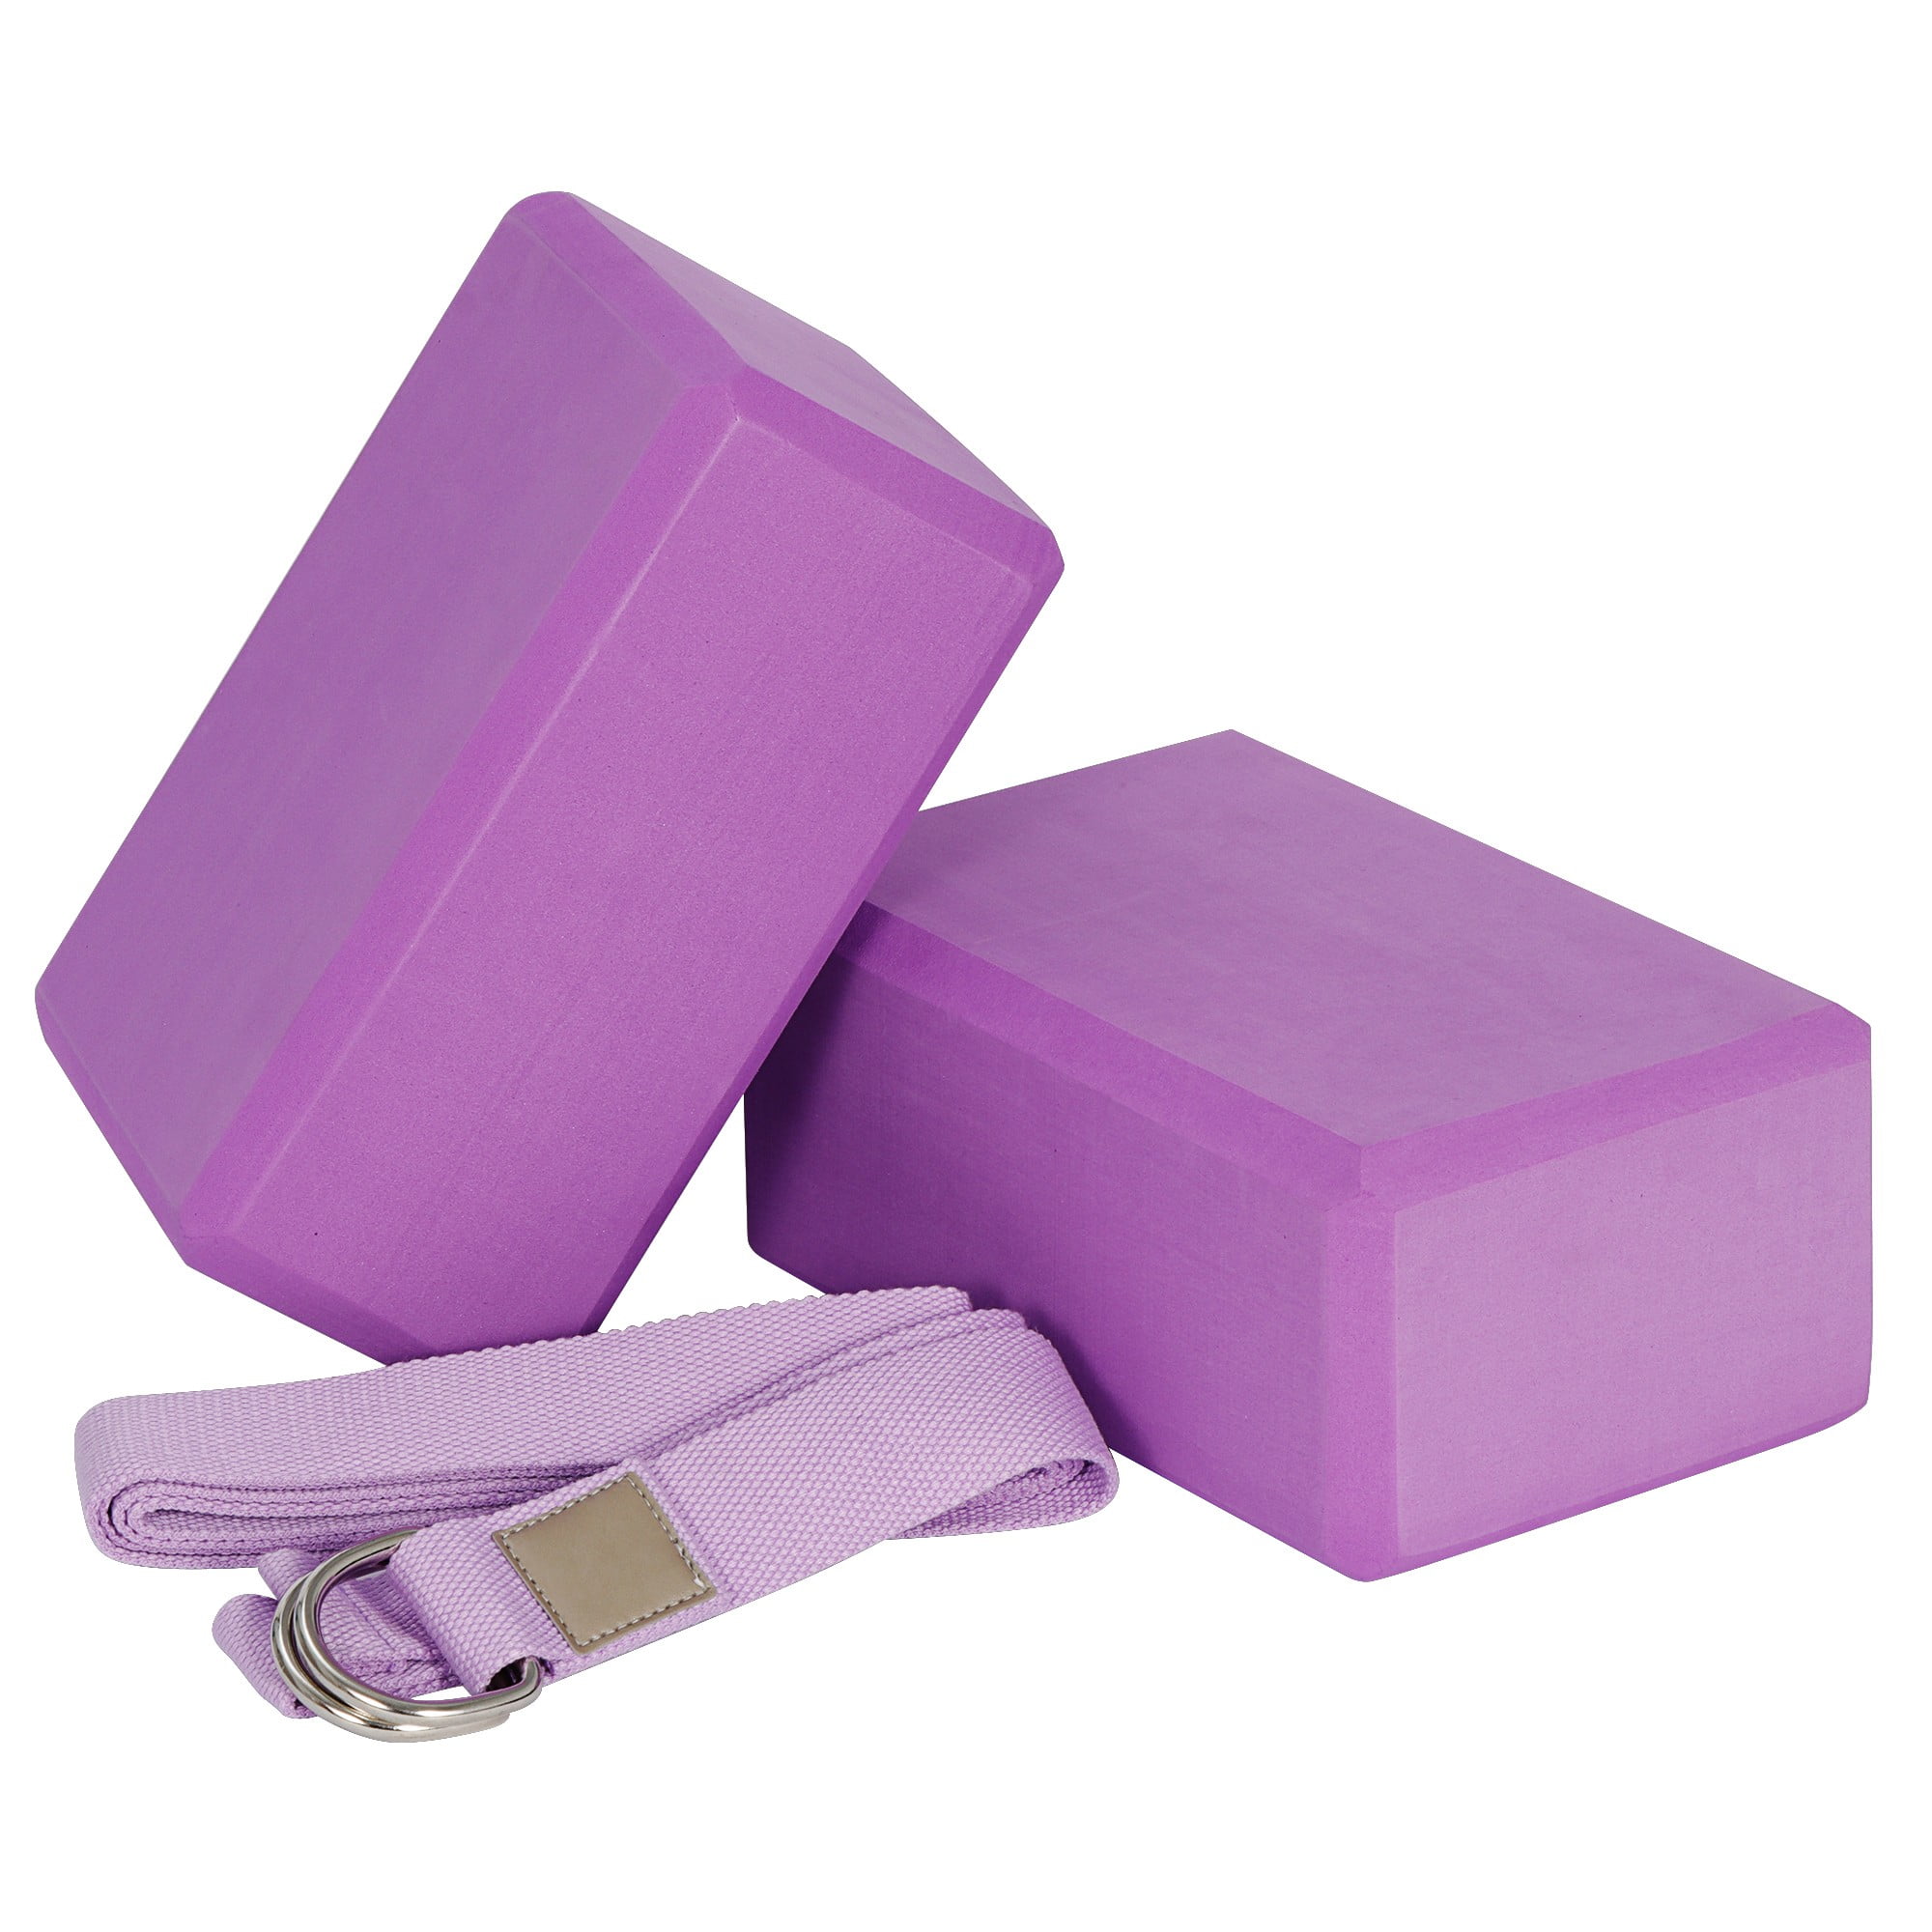 Yoga Blocks Purple Pack of 2-9"x6"x4"- Premium EVA Foam TRIDEER NEW 